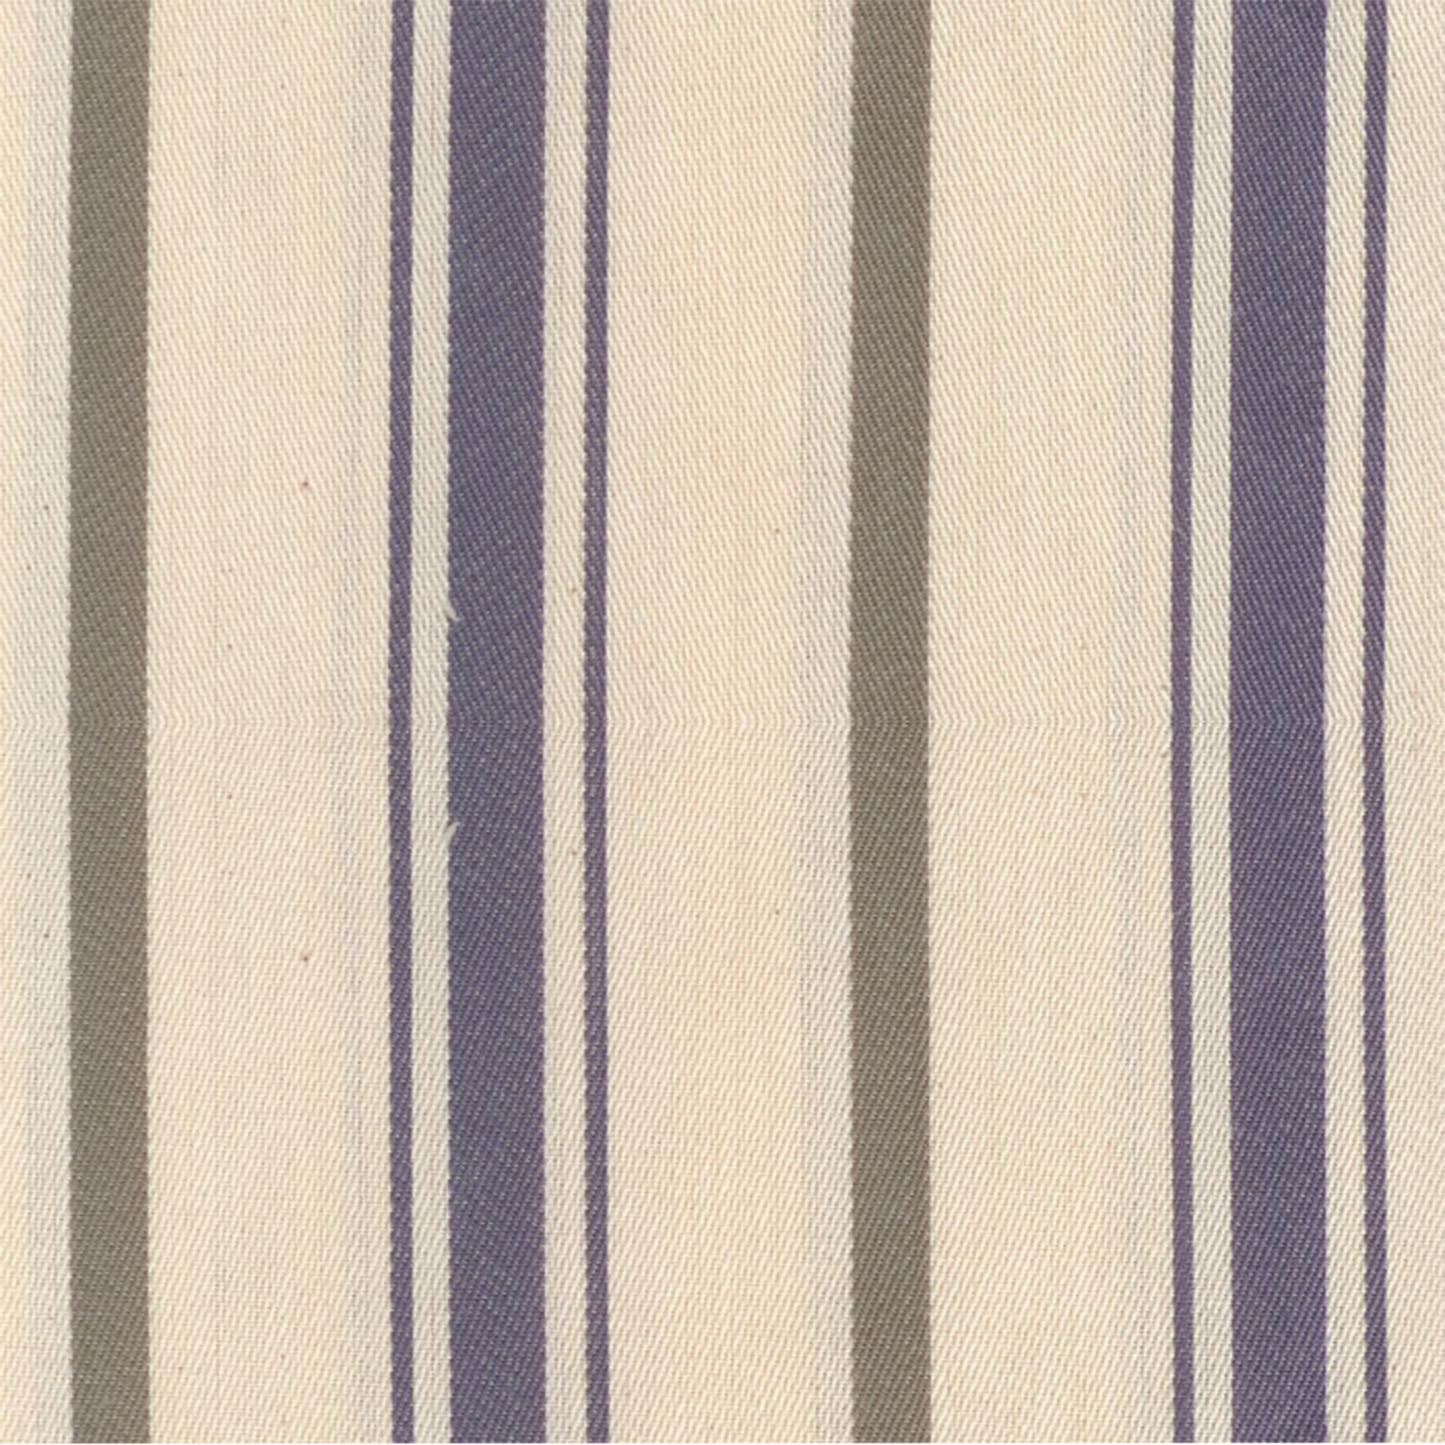 100% Egyptian Cotton Upholstery Fabric Cushion Curtain Throw Craft Decor Bedding